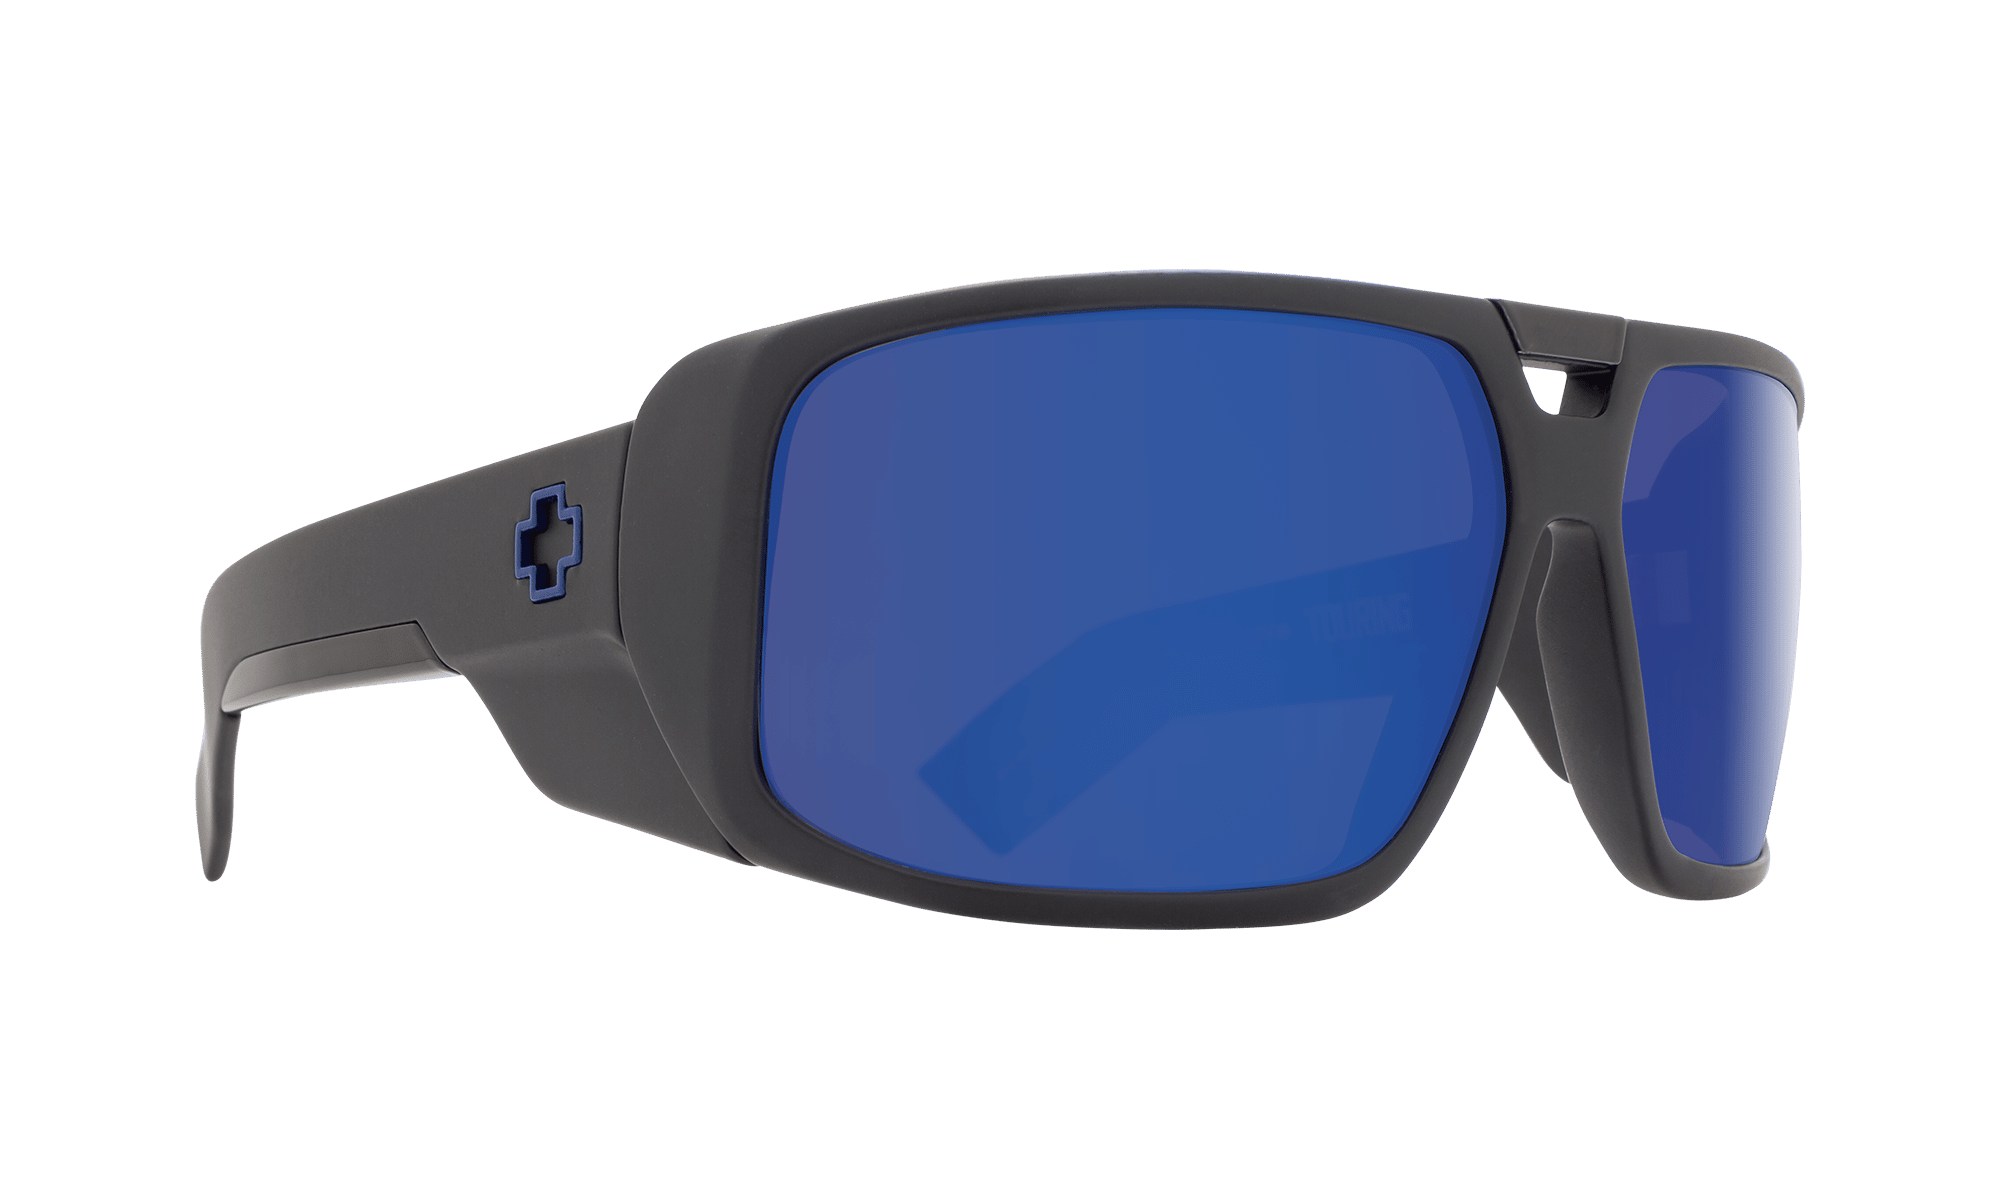 Spy Optic Touring Square Sunglasses